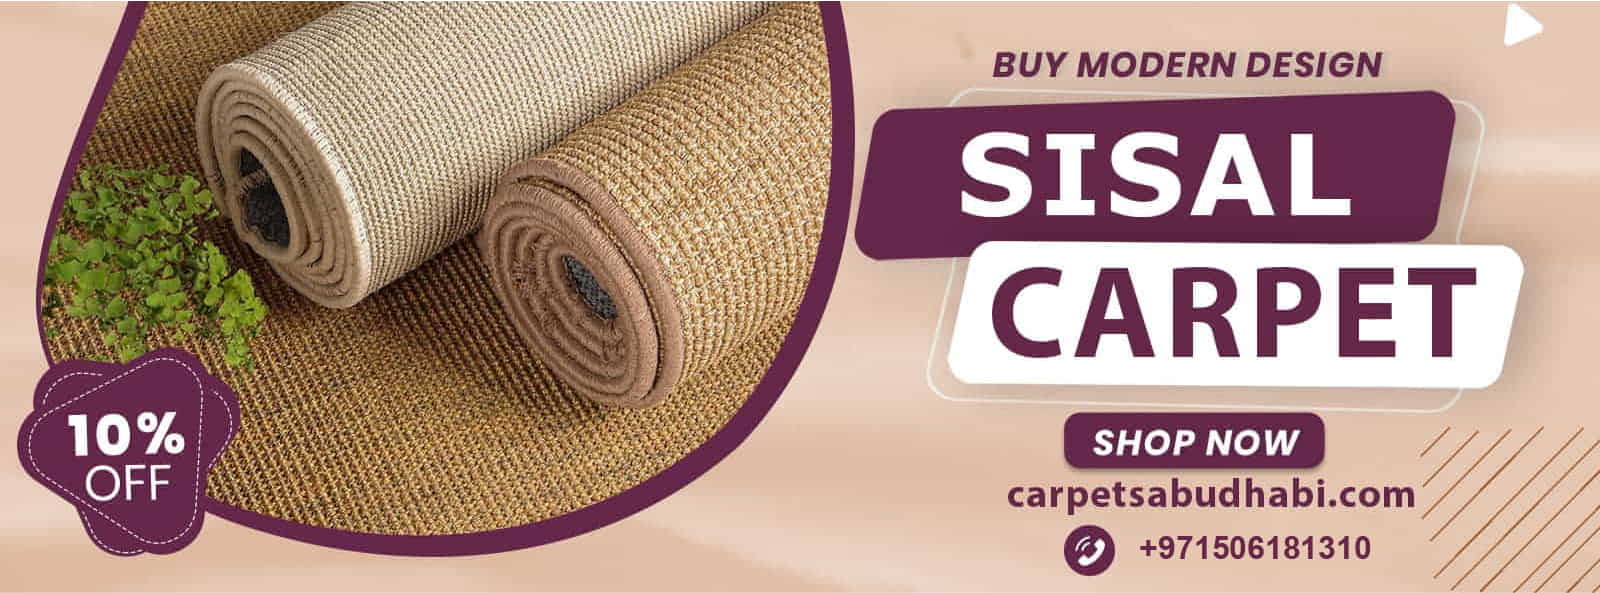 sisal carpets 1